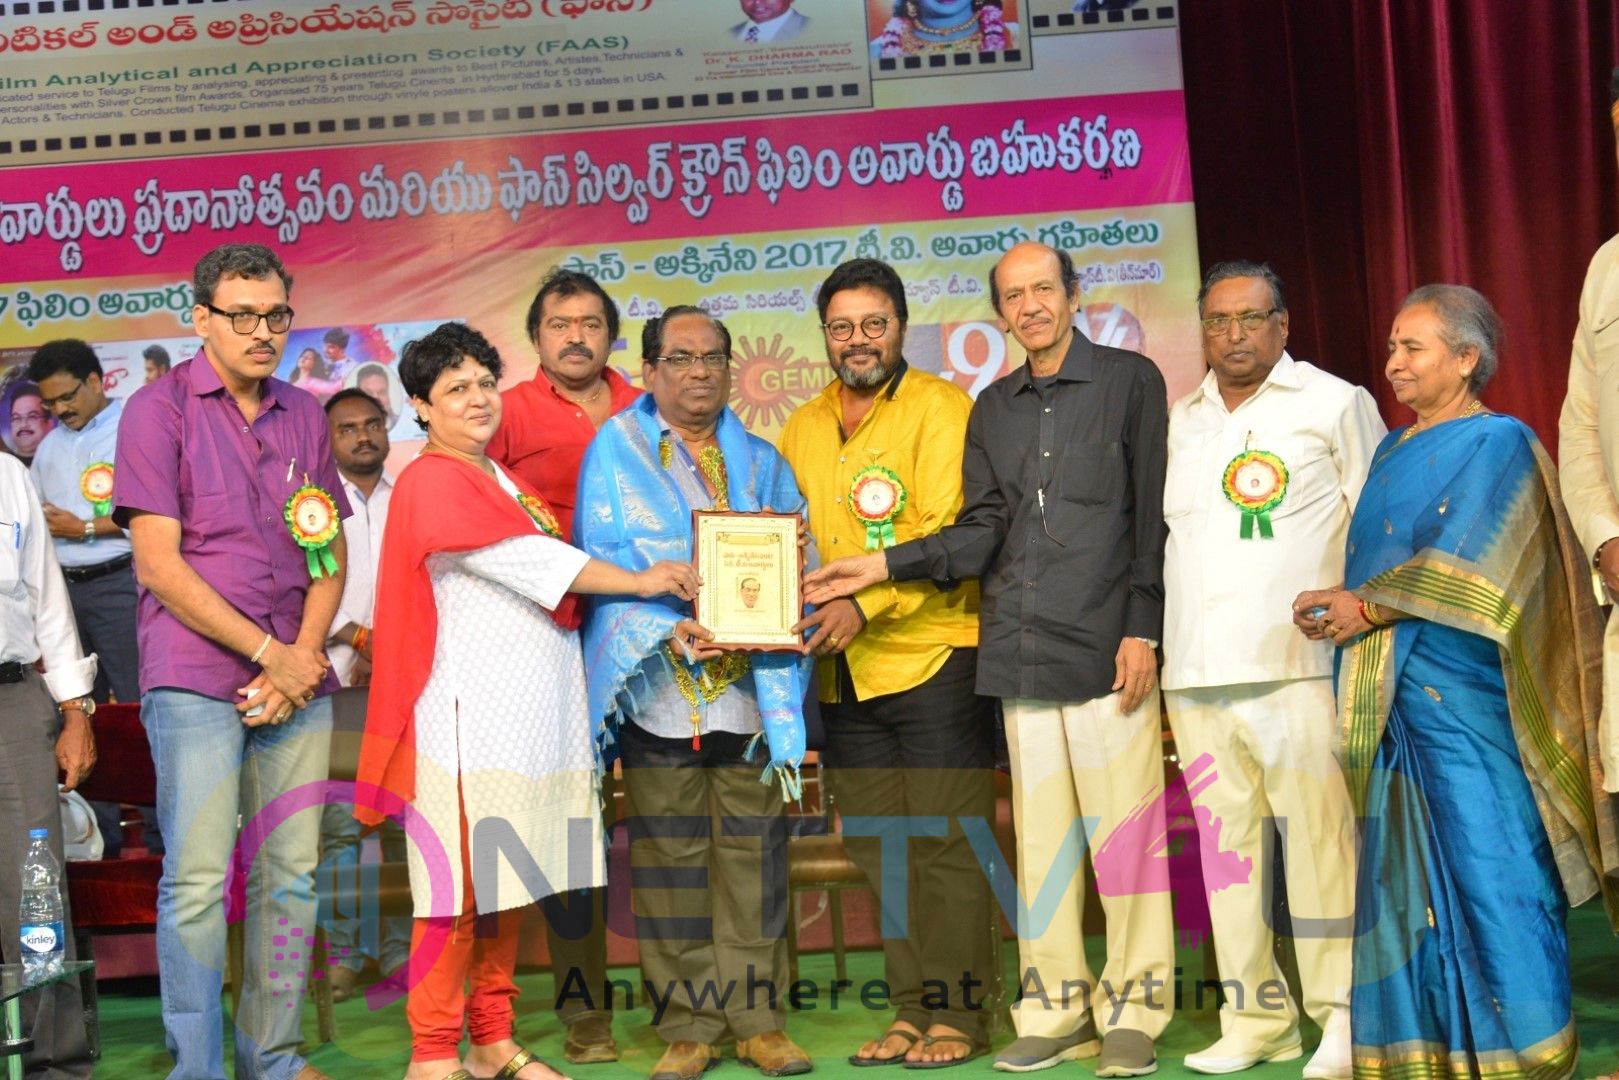 Film Analytical And Appreciation Society Awards 2017 Photos Telugu Gallery